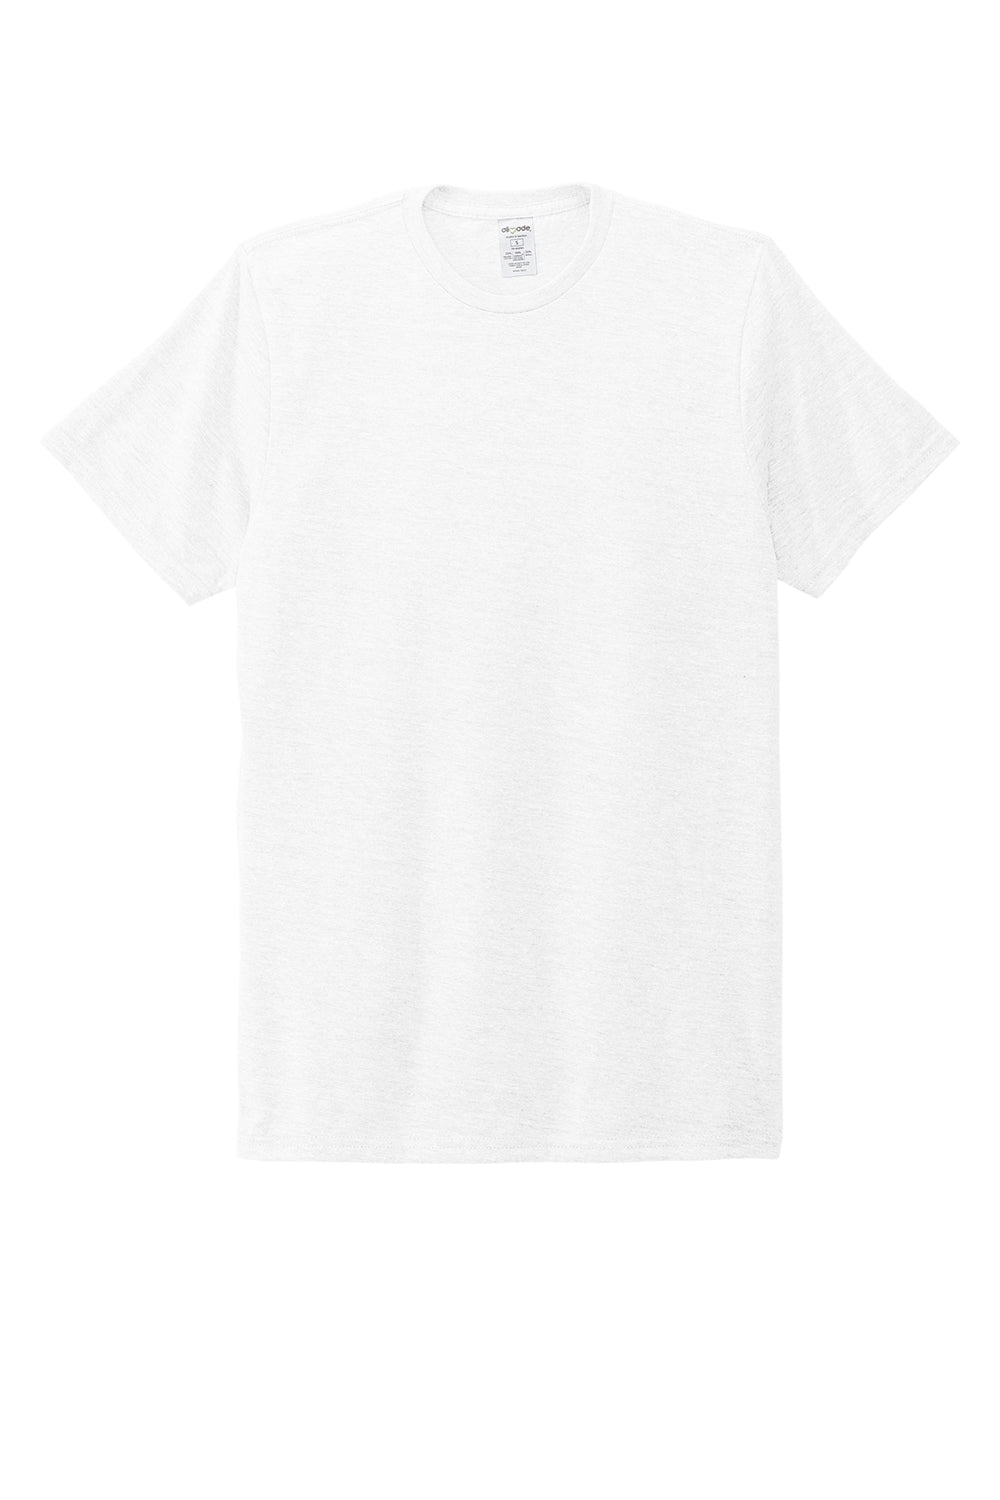 Allmade AL2004 Mens Short Sleeve Crewneck T-Shirt Bright White Flat Front